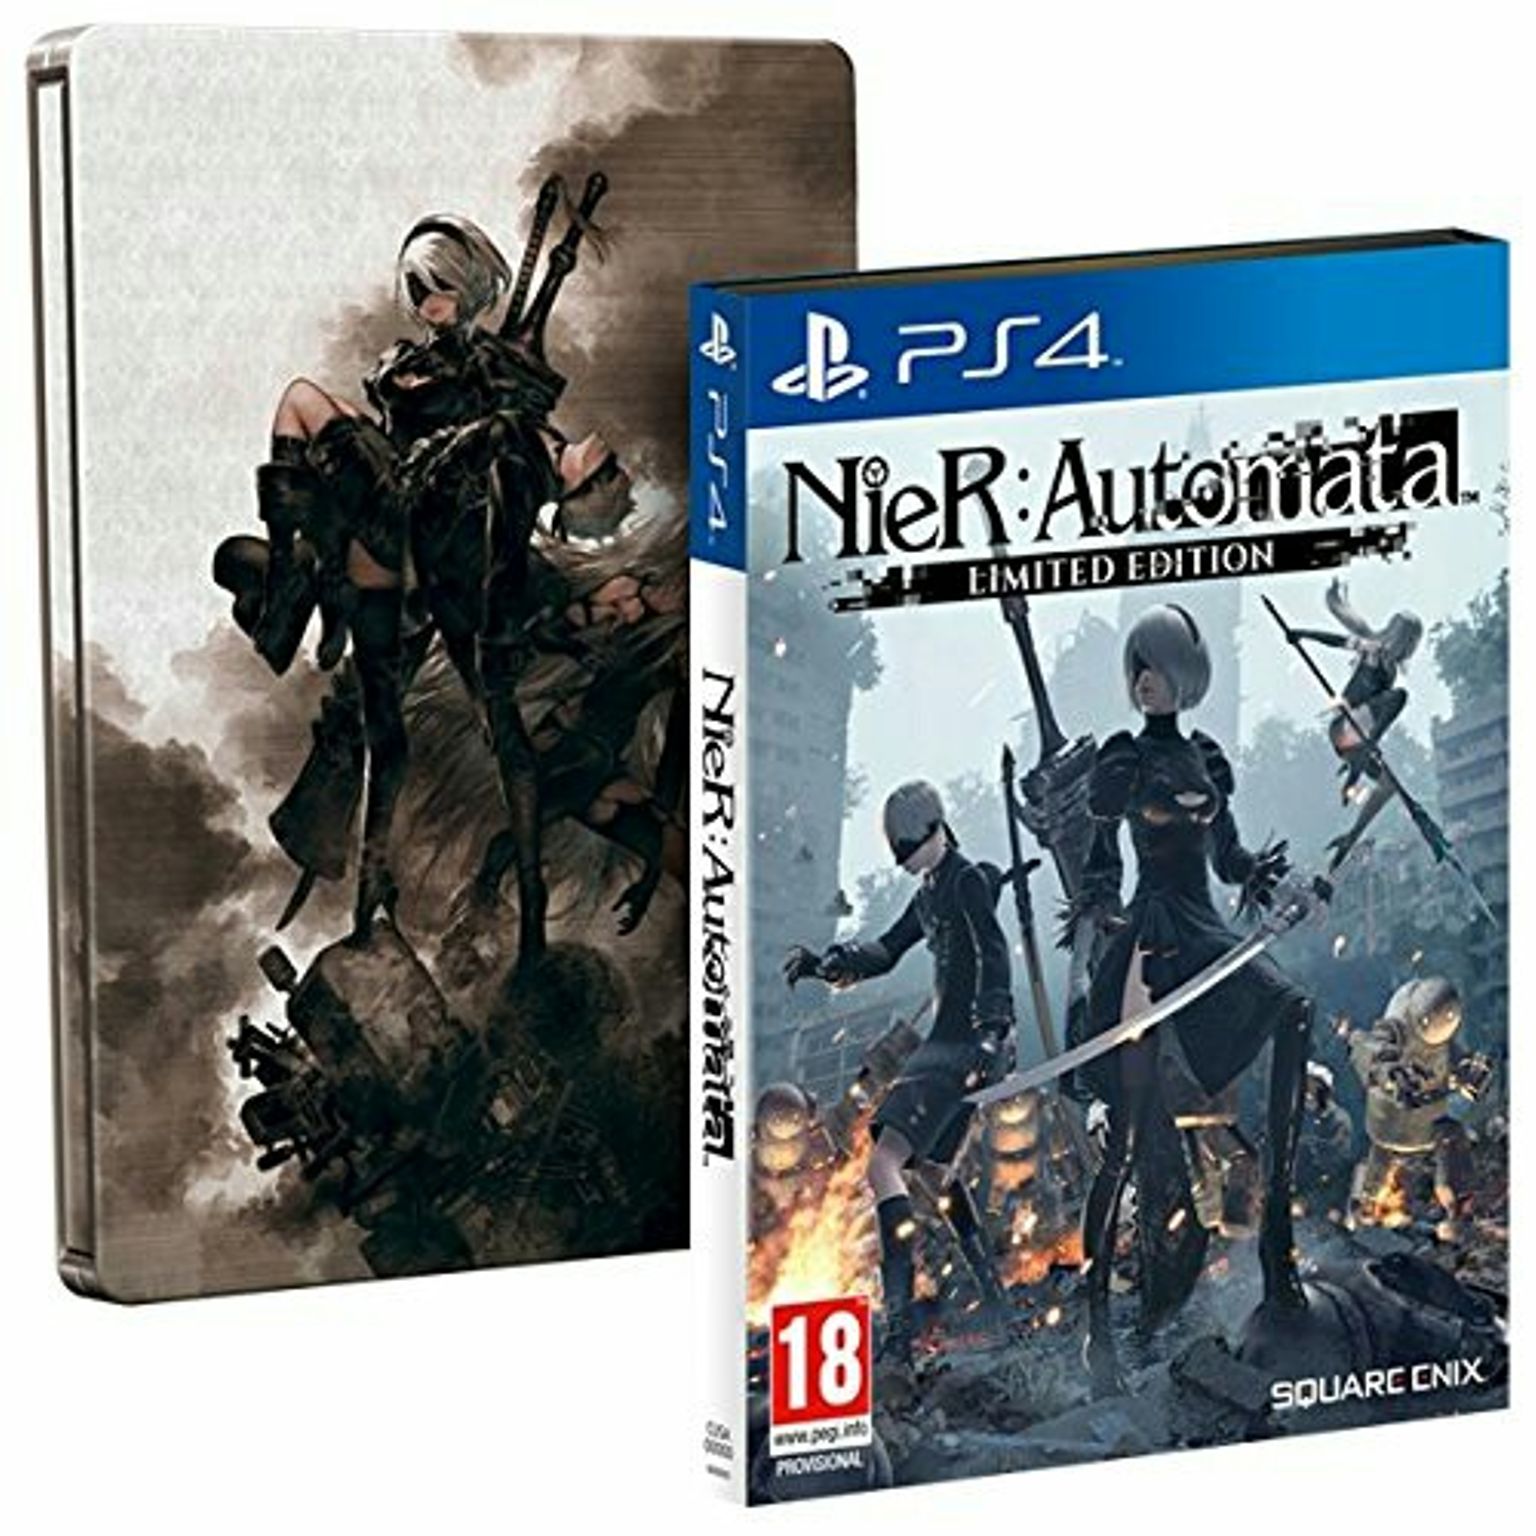 NieR Automata Steelbook Limited Edition (német slipcase) - PlayStation 4 Játékok